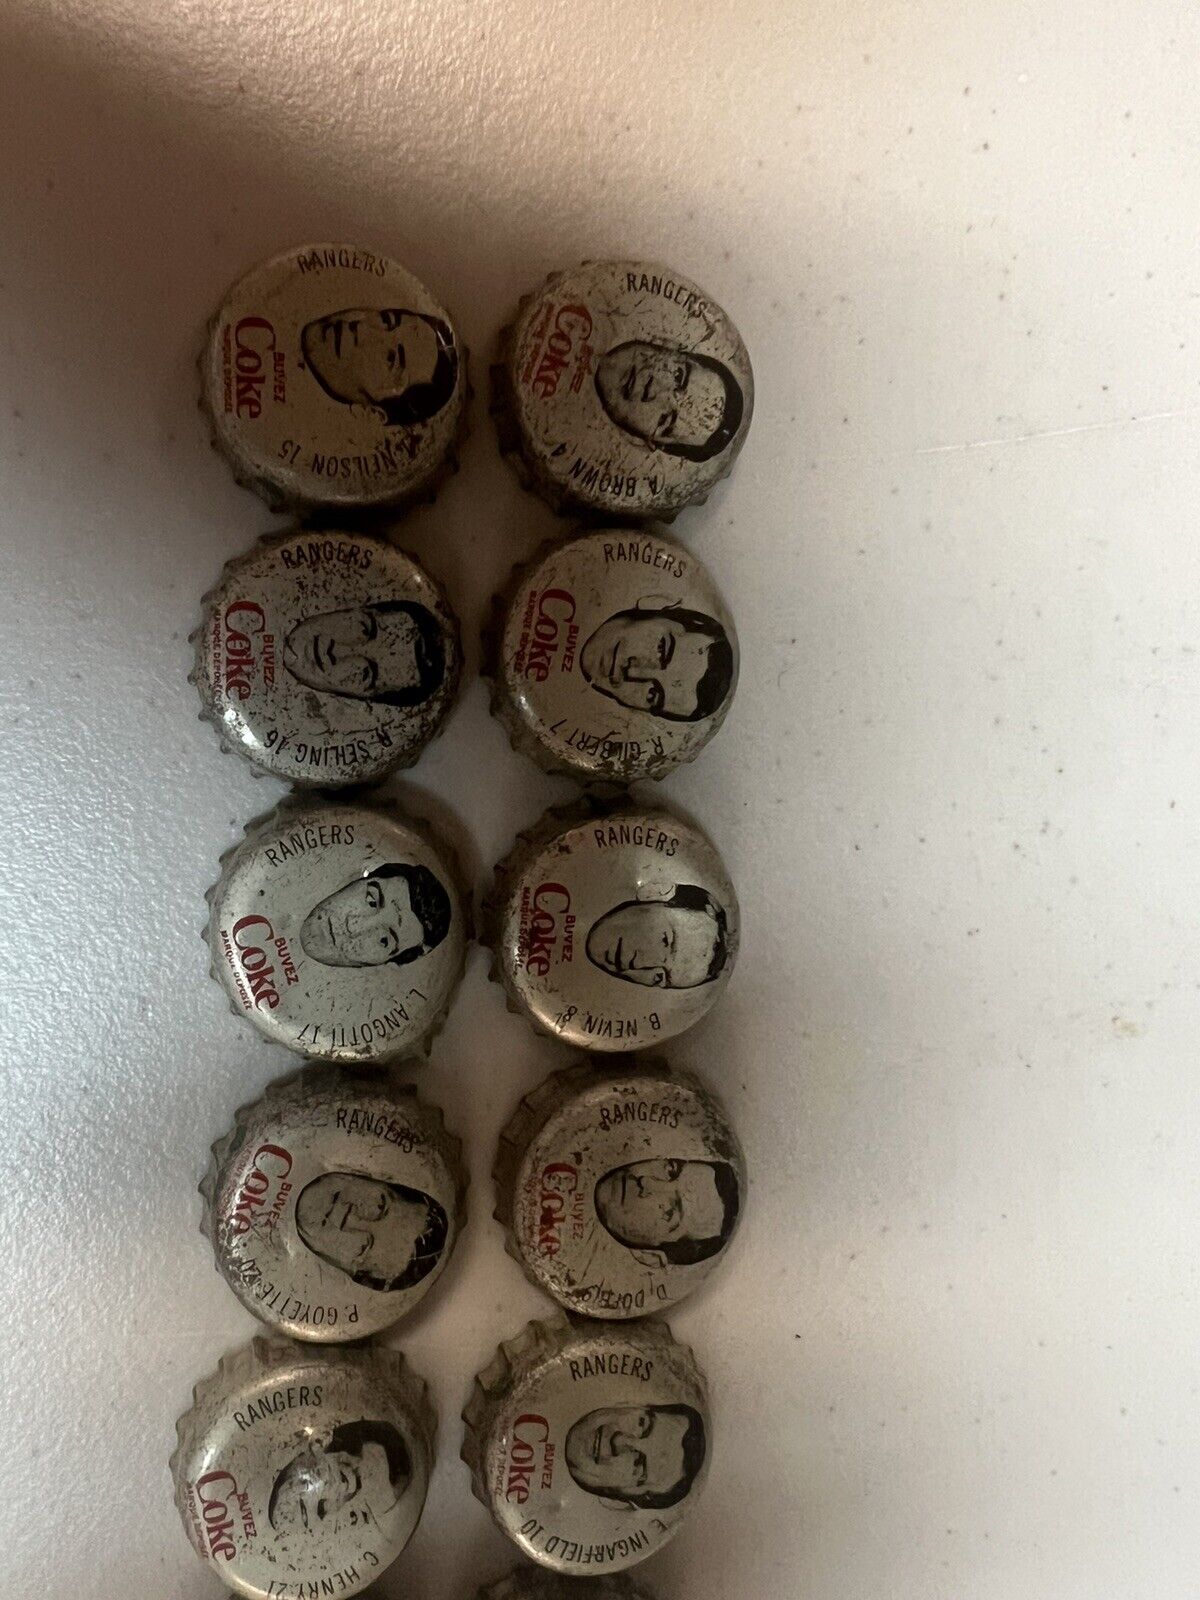 196465 Coca Cola Bottle Caps 14 Different New York Rangers NHL